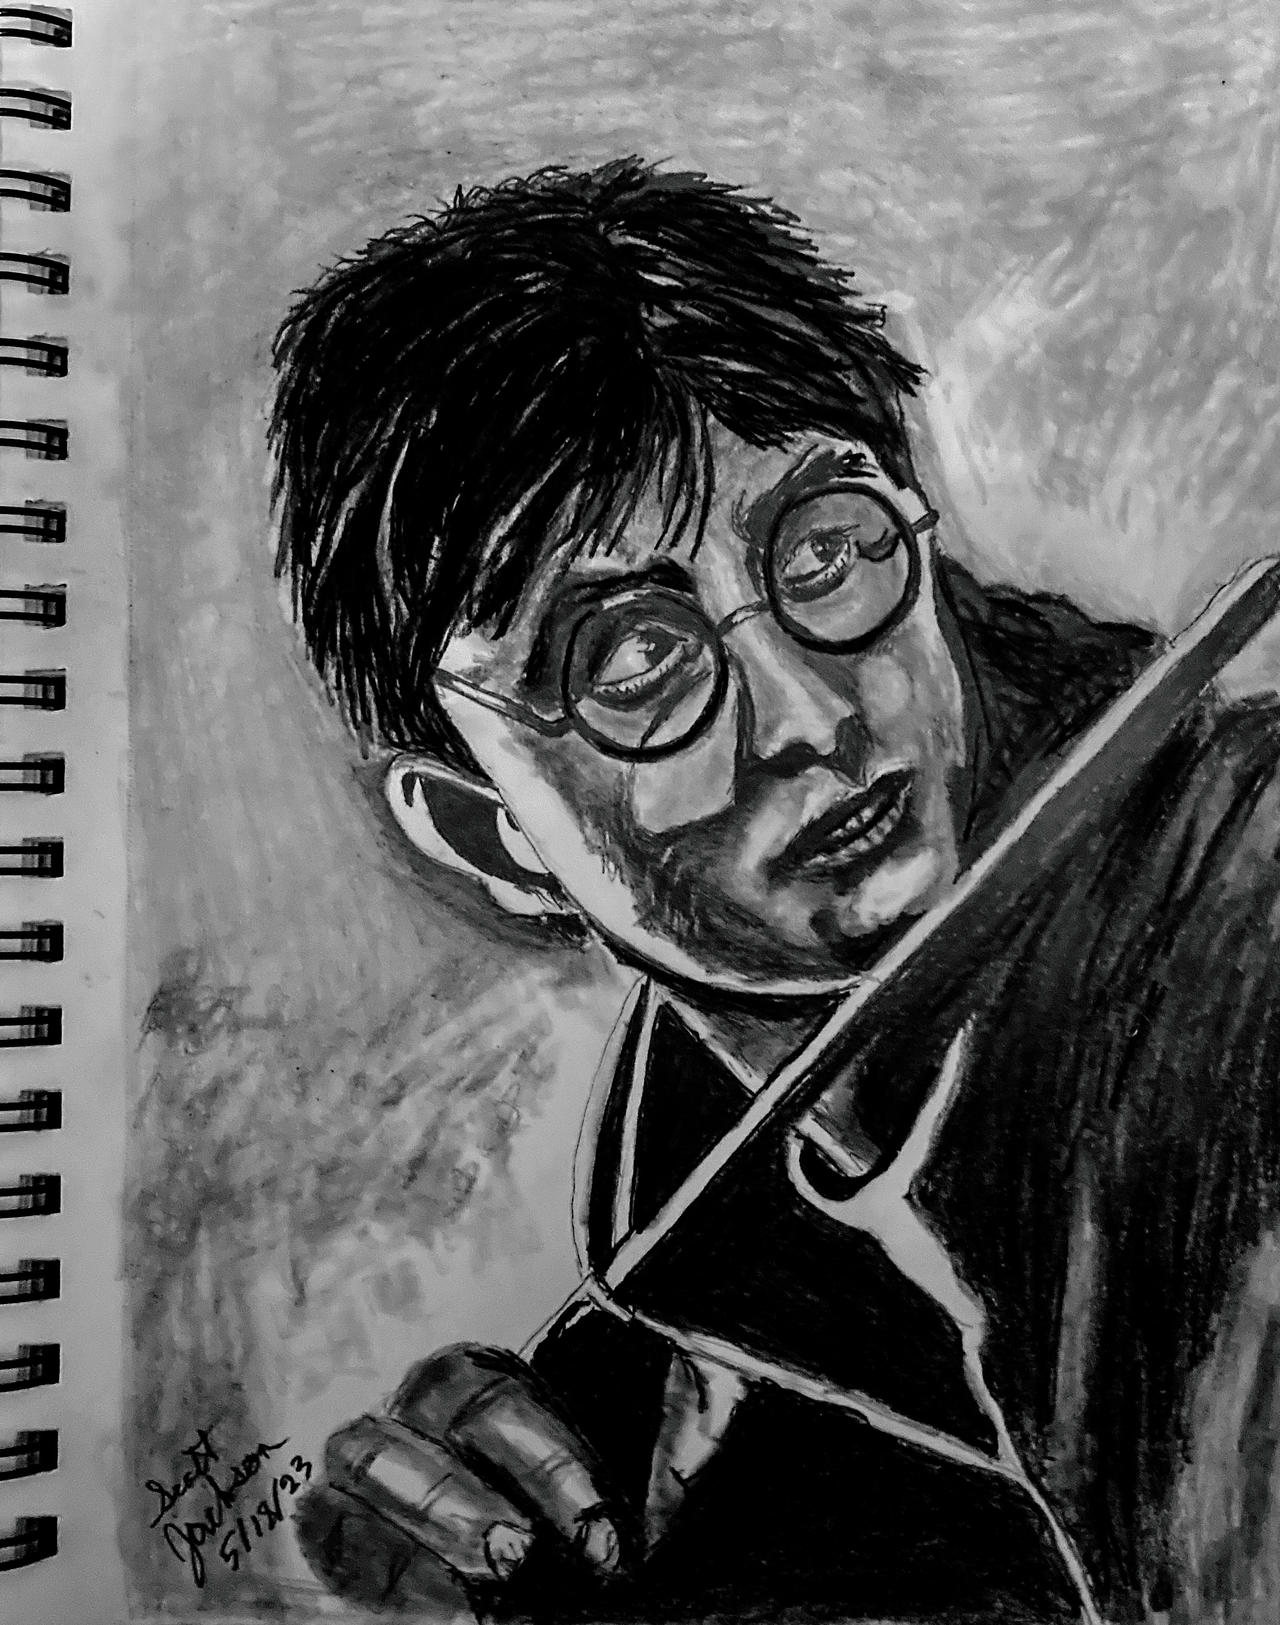 Harry Potter fan art pencil sketch by sejphotography on DeviantArt